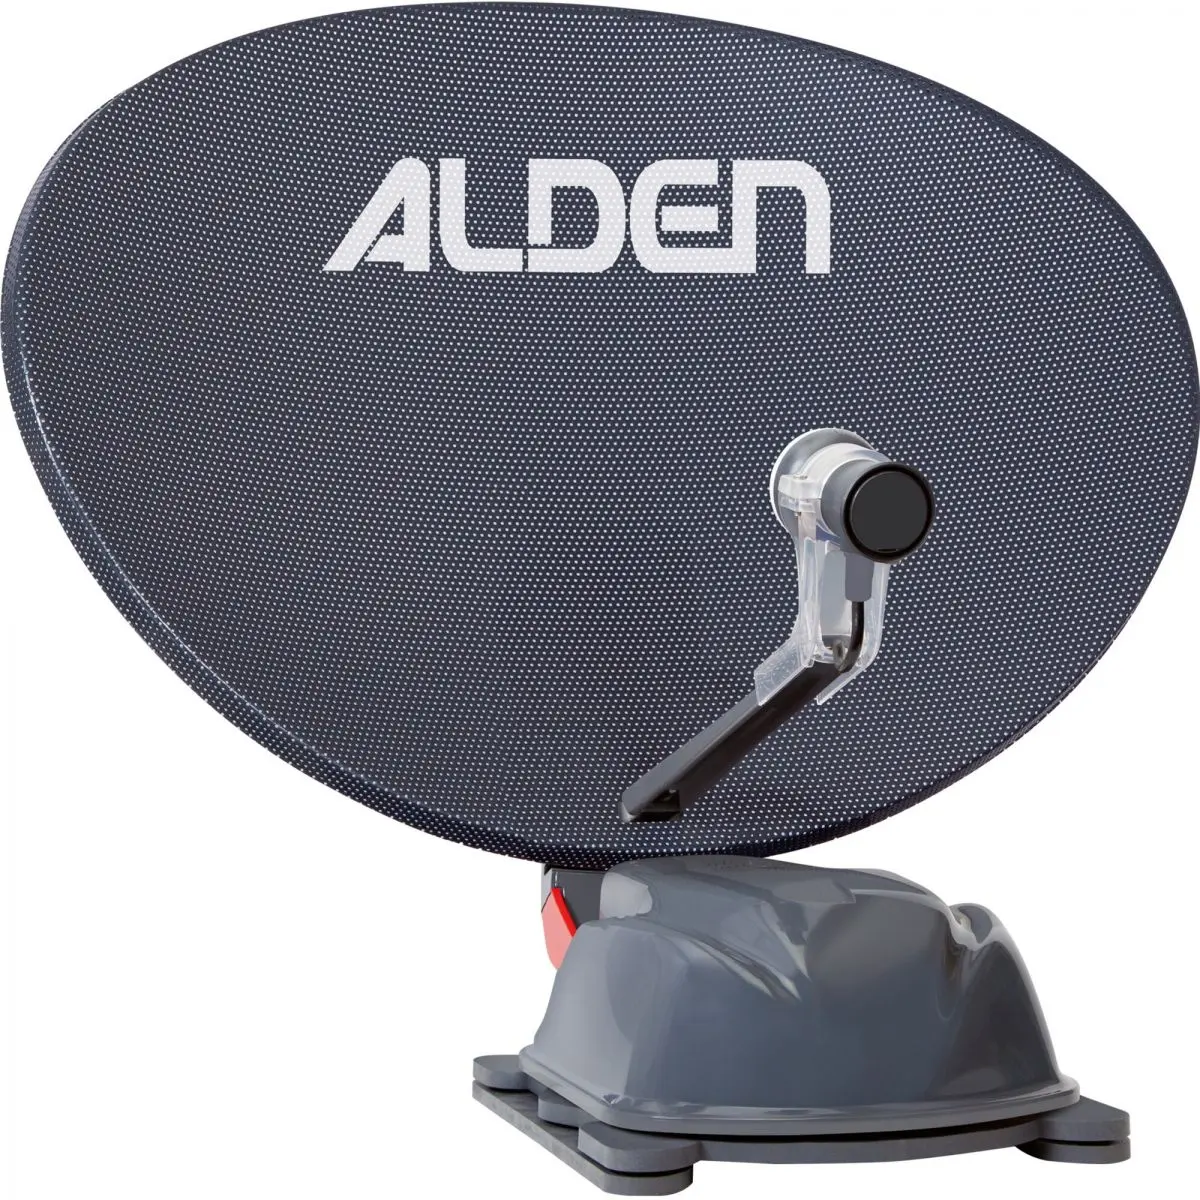 Satelitný systém Alden AS2 80 HD Platinium vrátane riadiaceho modulu S.S.C. HD a TV Ultrawide 18,5".